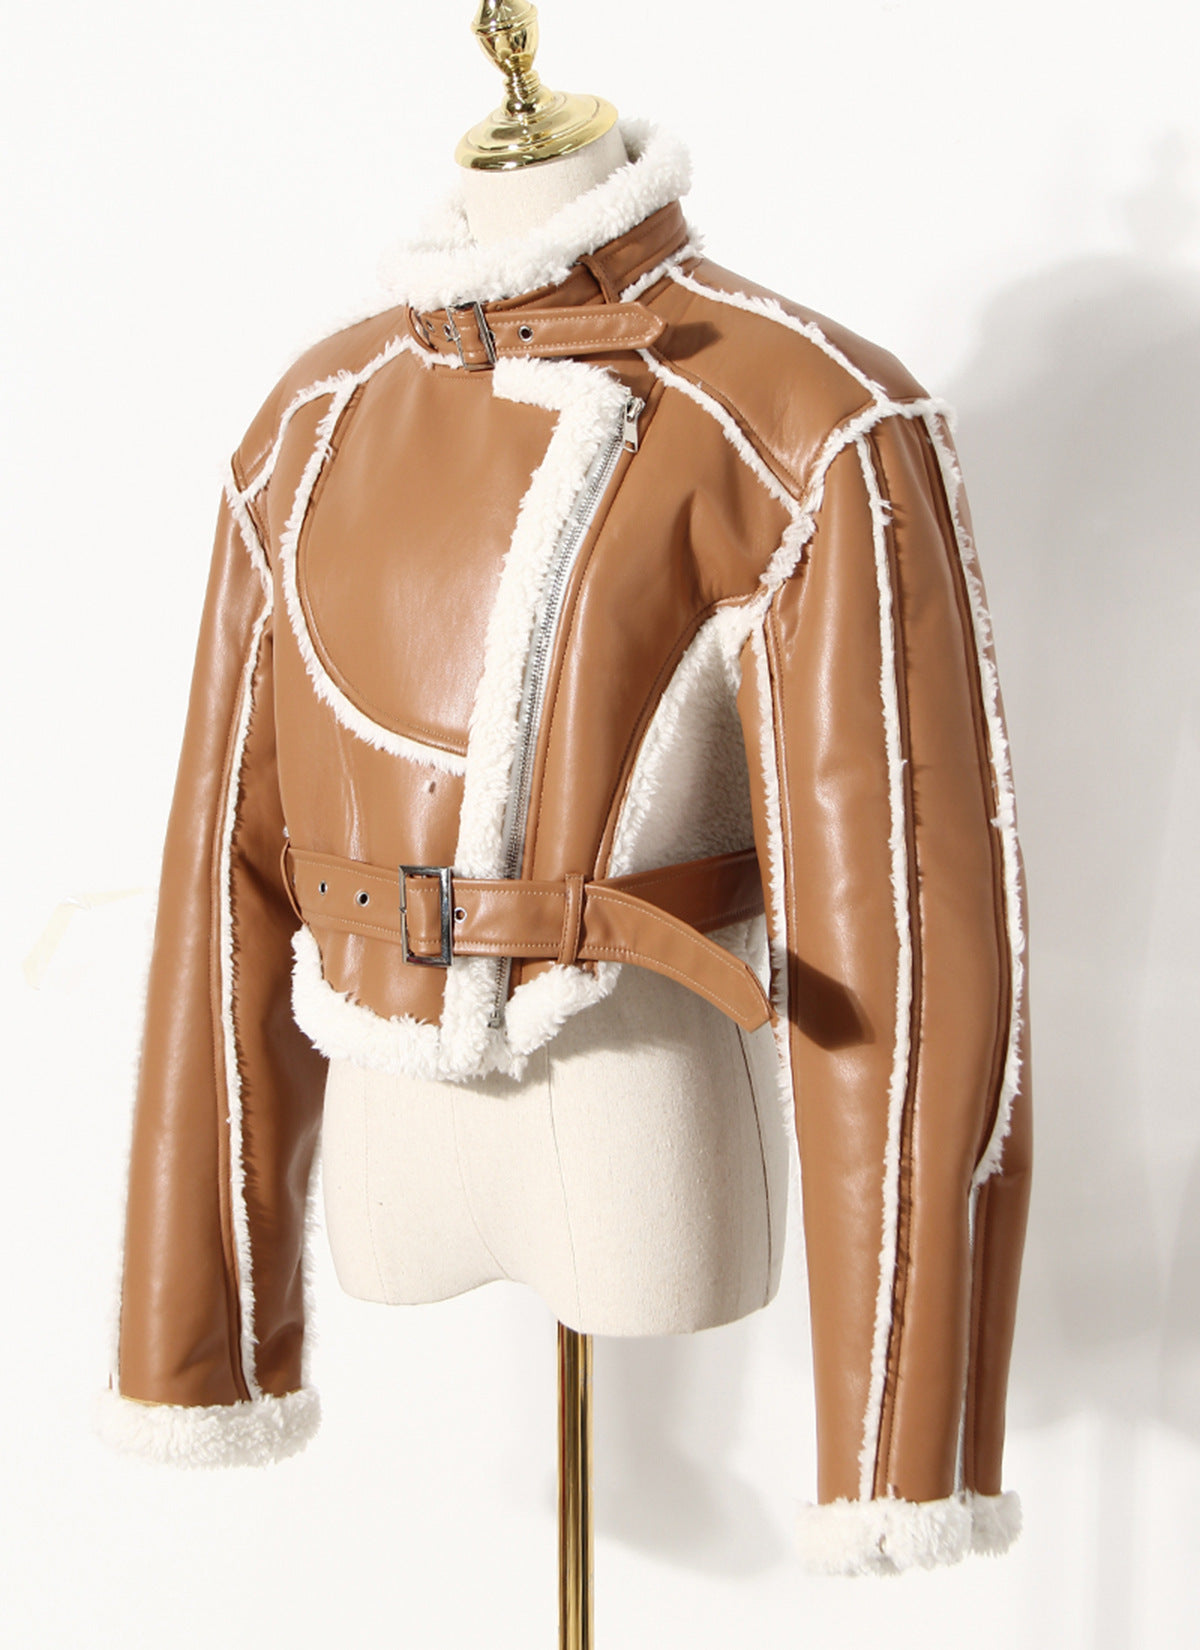 Locomotive Short Jacket Personality Coat Women Winter Handsome Leather Coat Faux Shearling Jacket Top Short Cotton Jacket